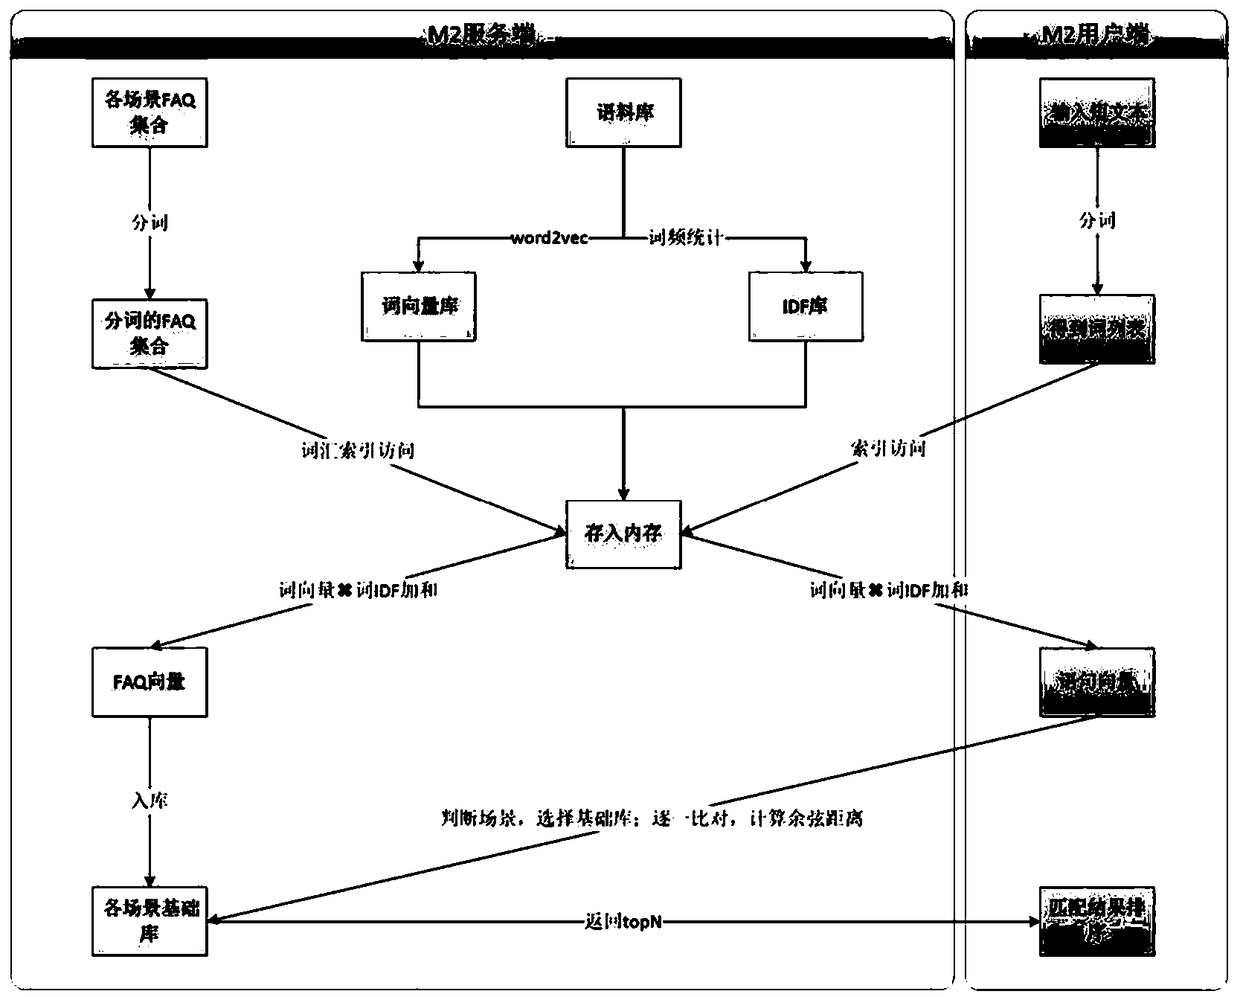 A dialog system automatic optimization method based on log learning